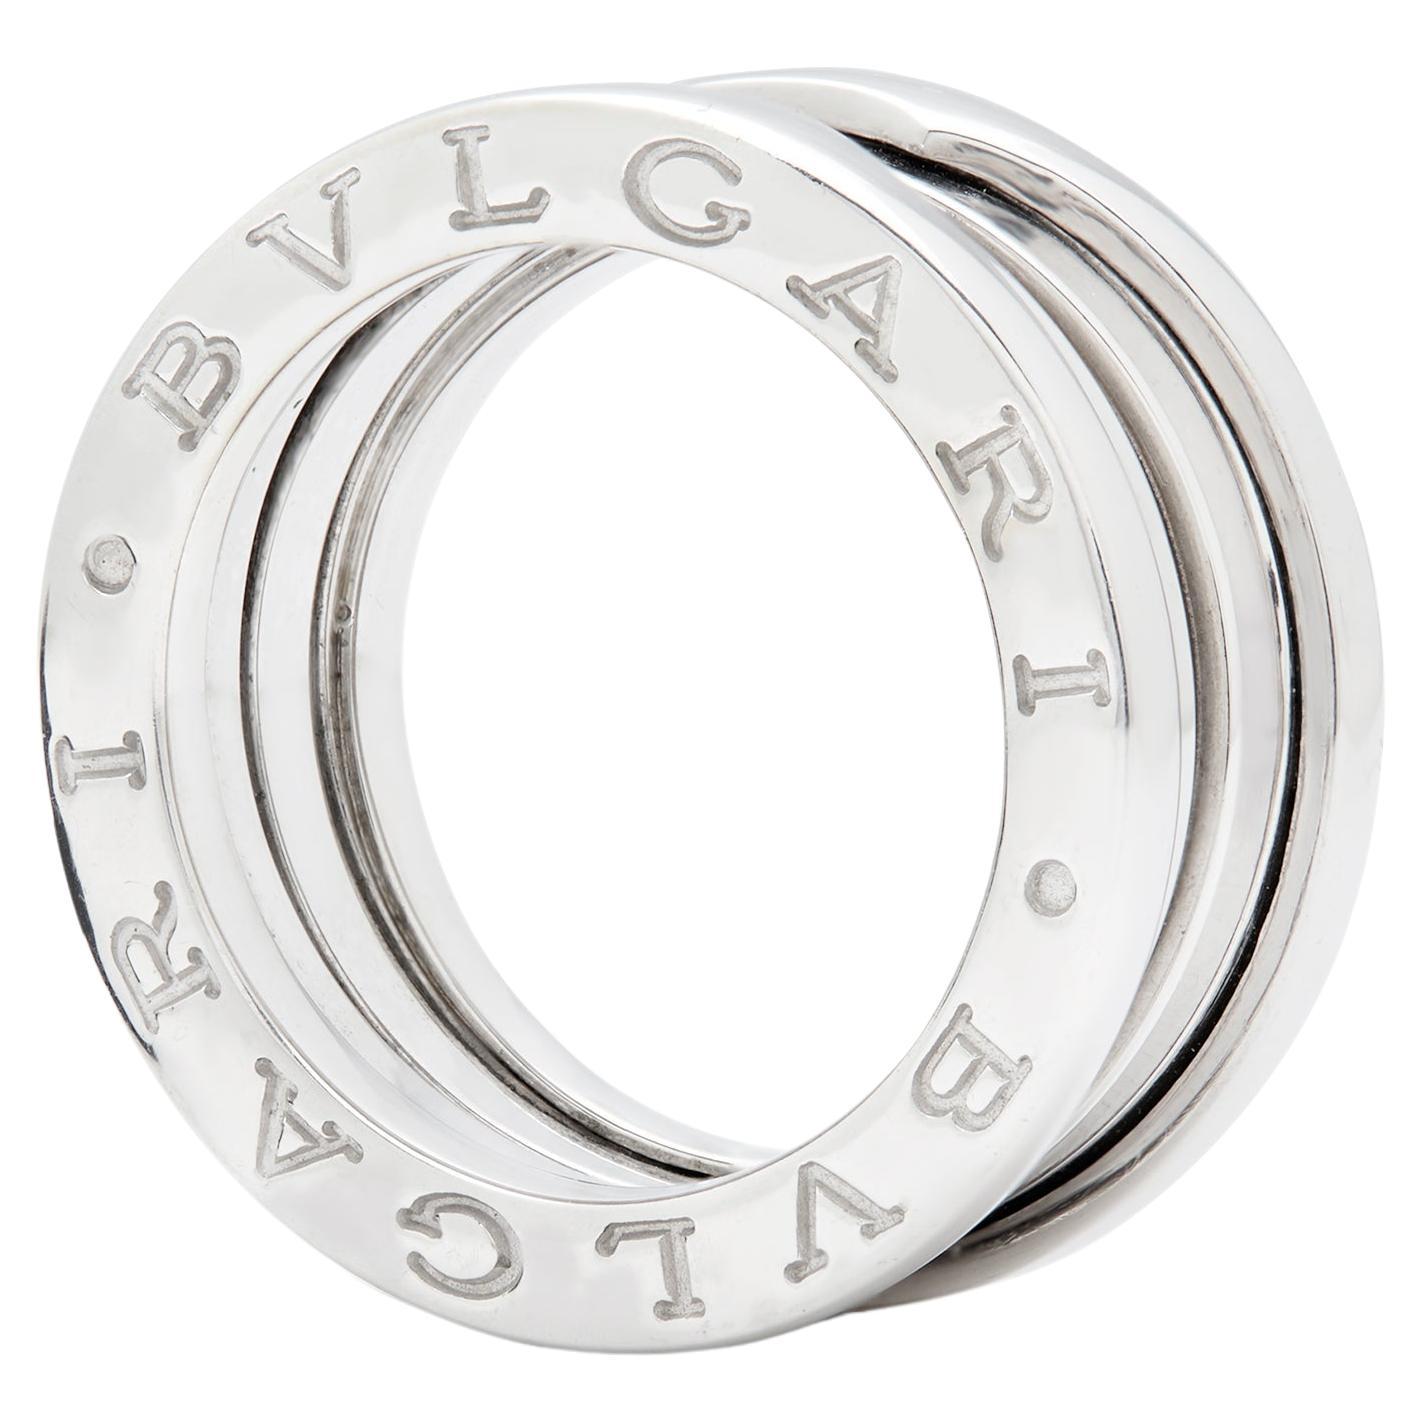 Bulgari B-Zero ring, white gold size 48 model number 323530 For Sale